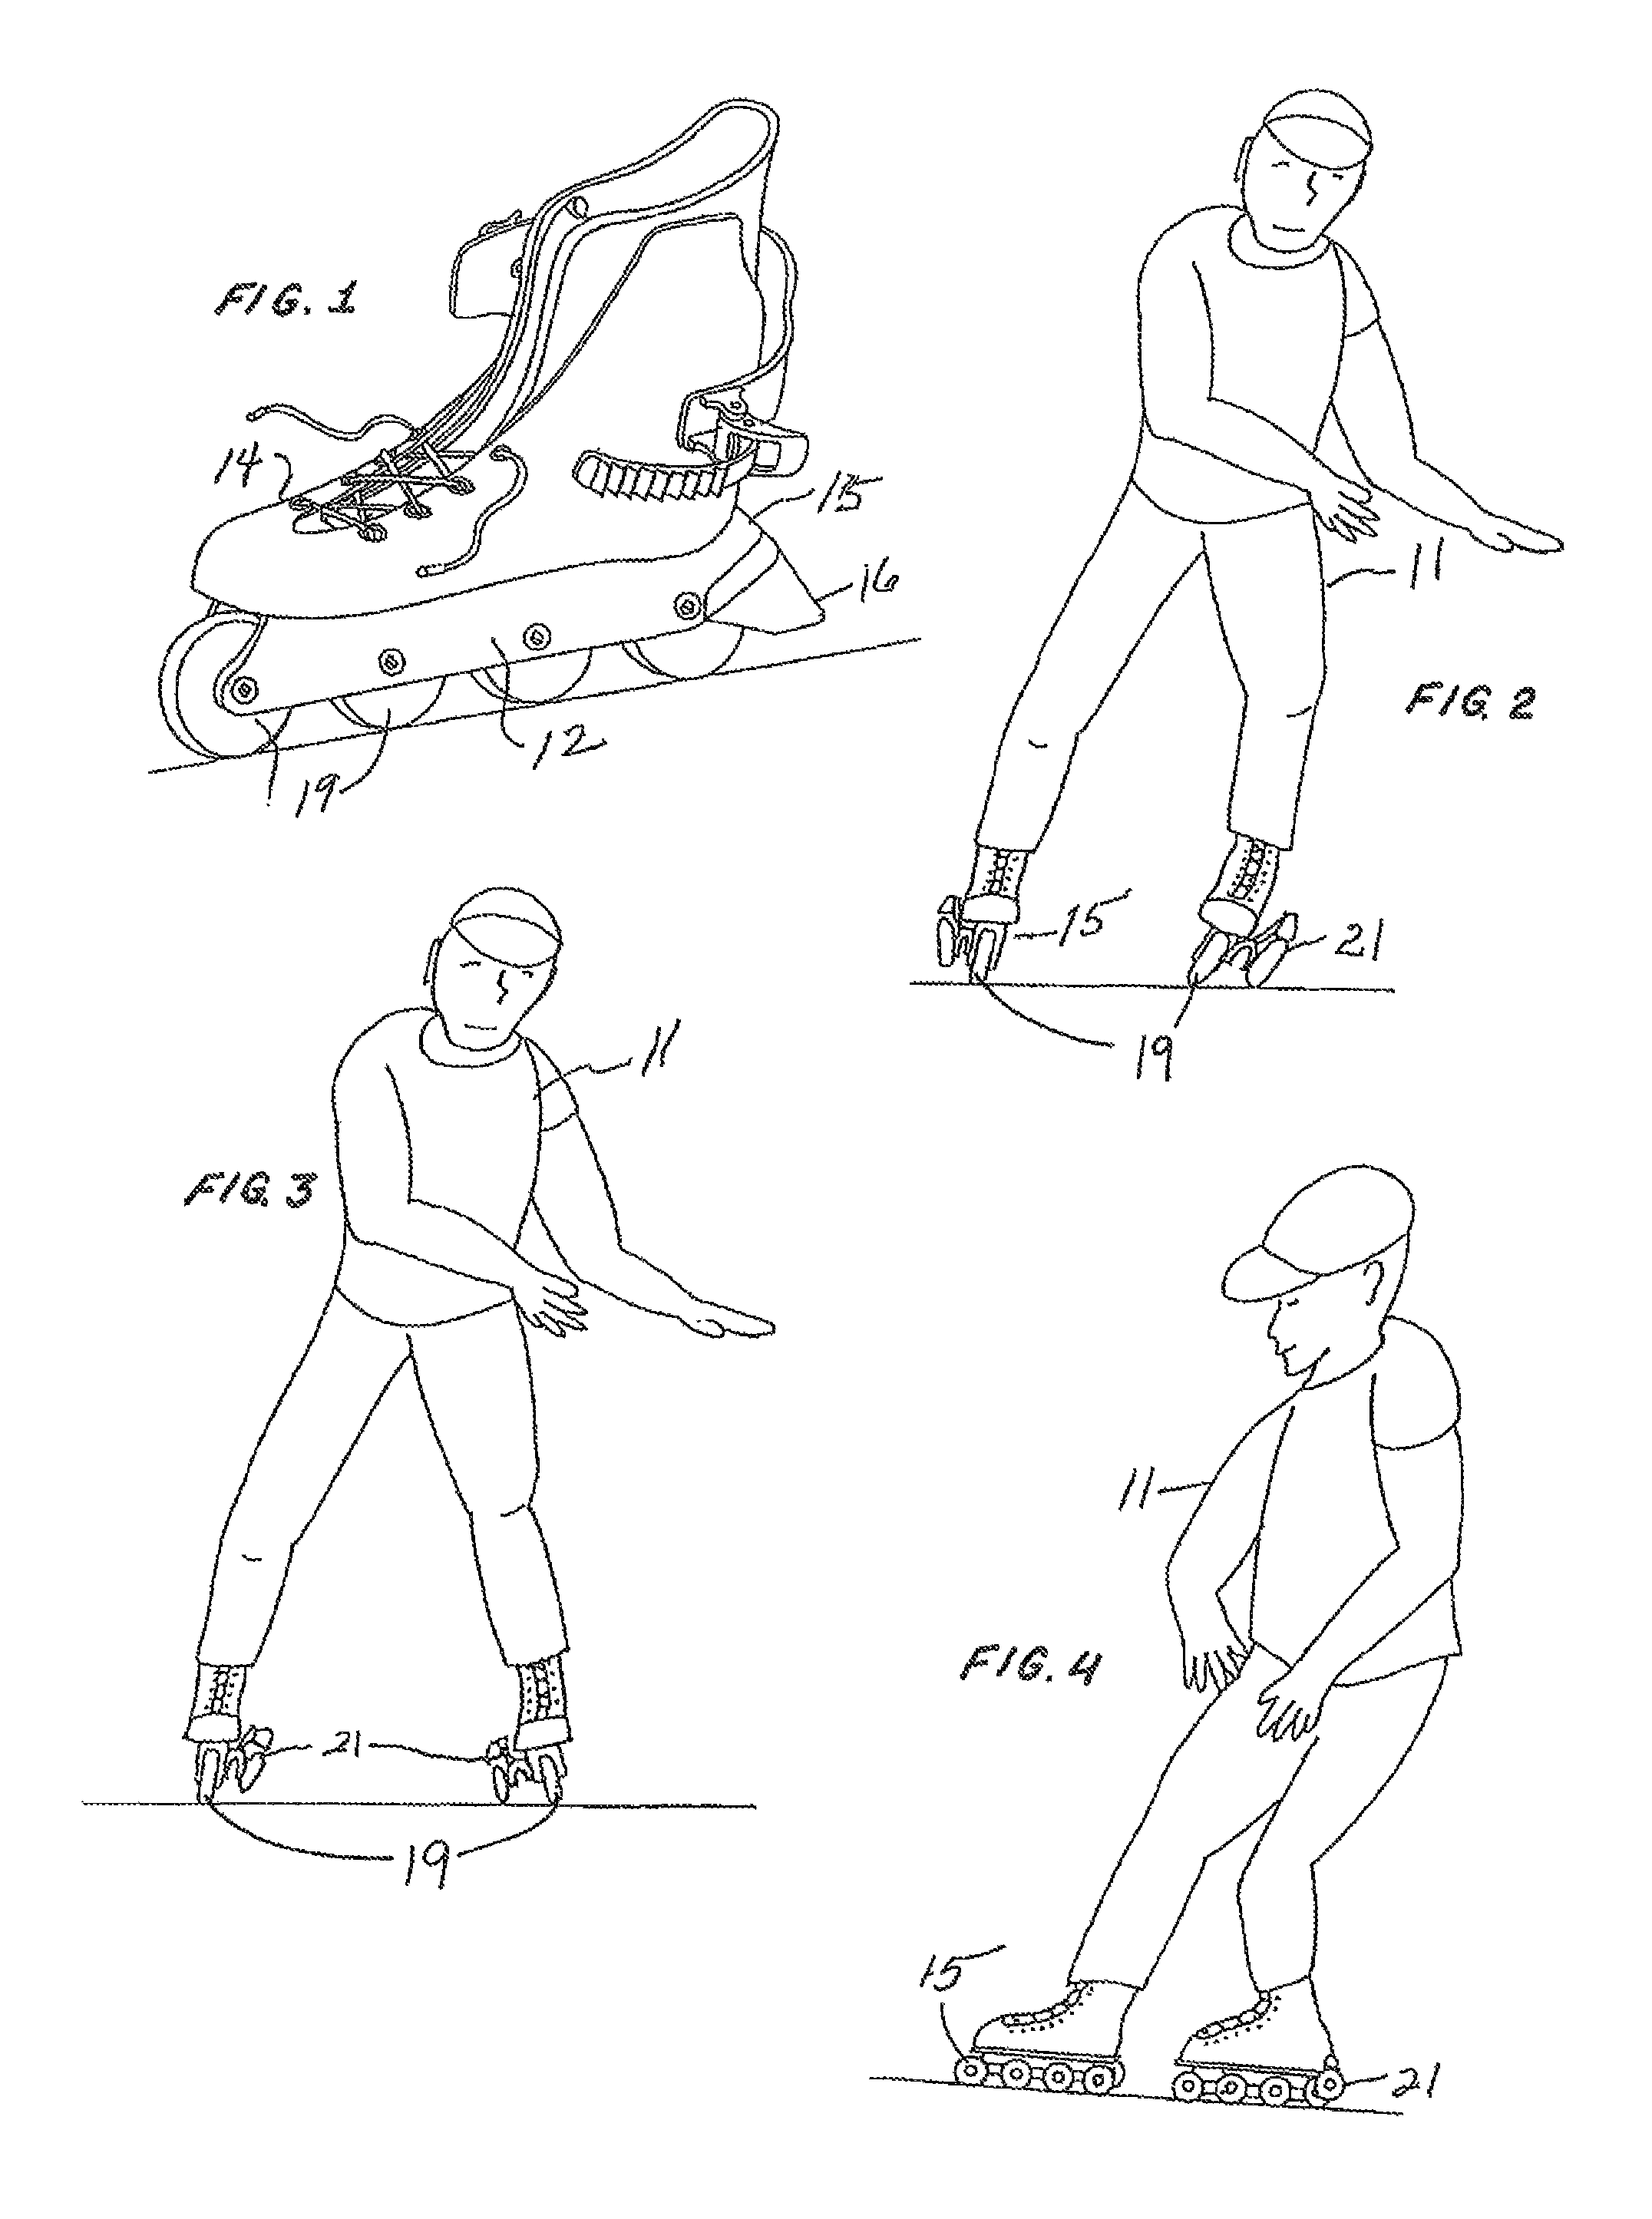 Inline skates training device